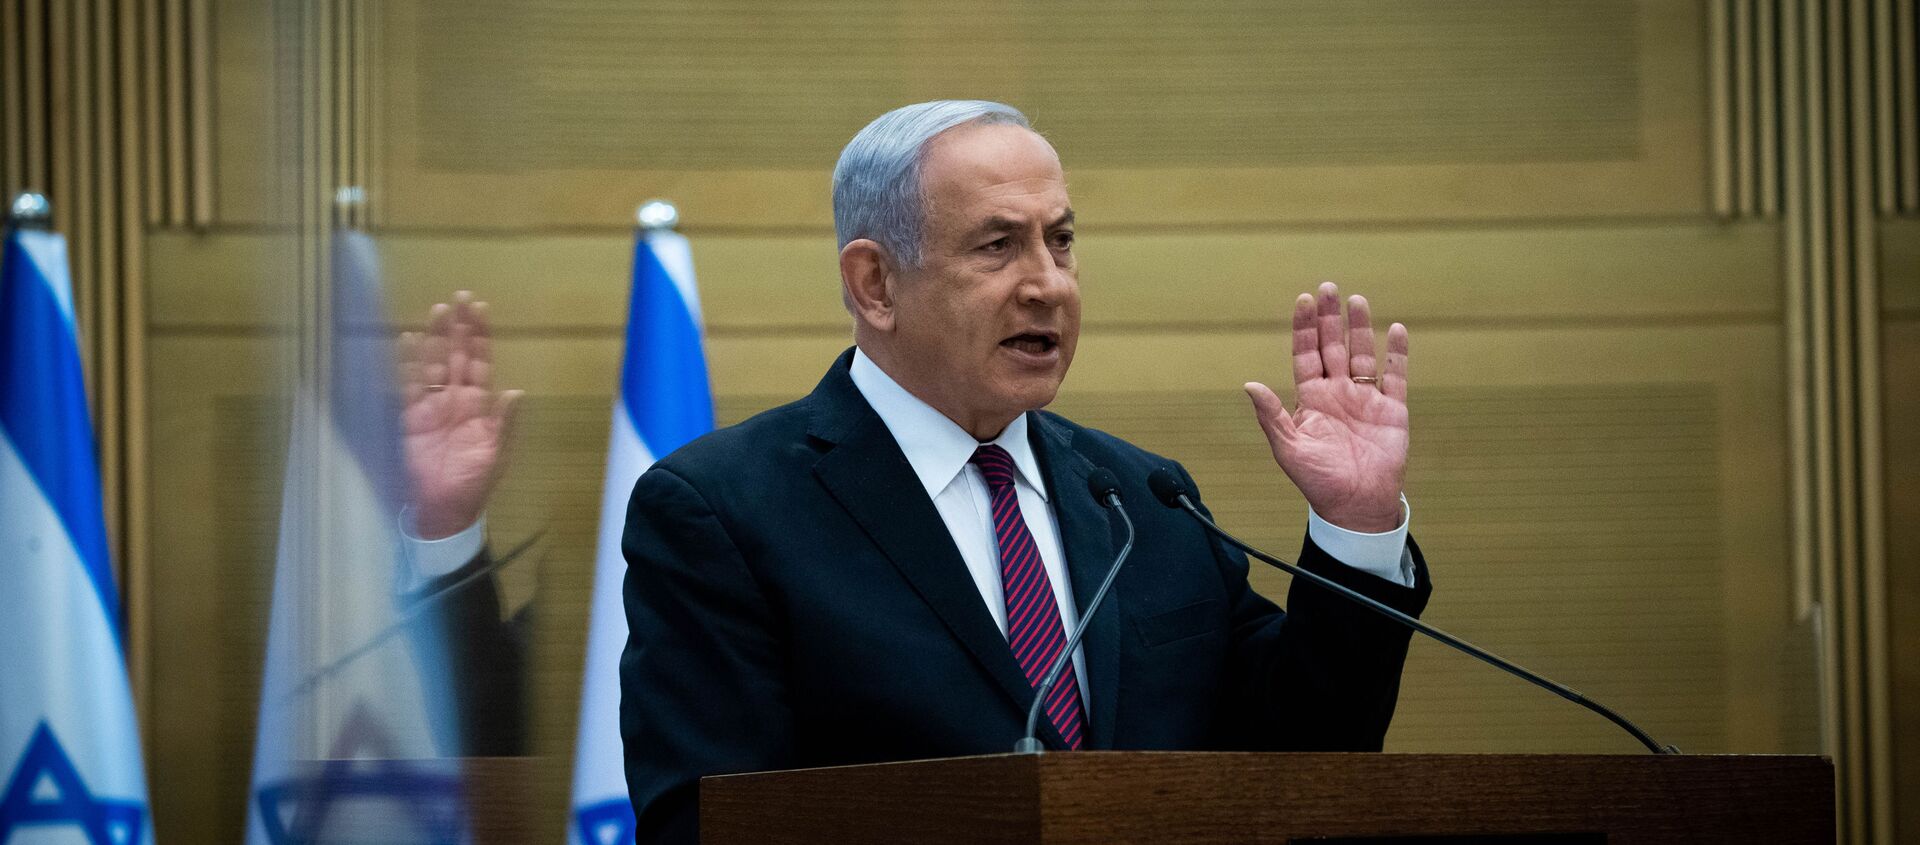 Israeli Prime Minister Benjamin Netanyahu delivers a statement to his Likud party MKs (members of Knesset), at the Likud centre in the Knesset in Jerusalem on December 2, 2020. - Sputnik International, 1920, 12.01.2021